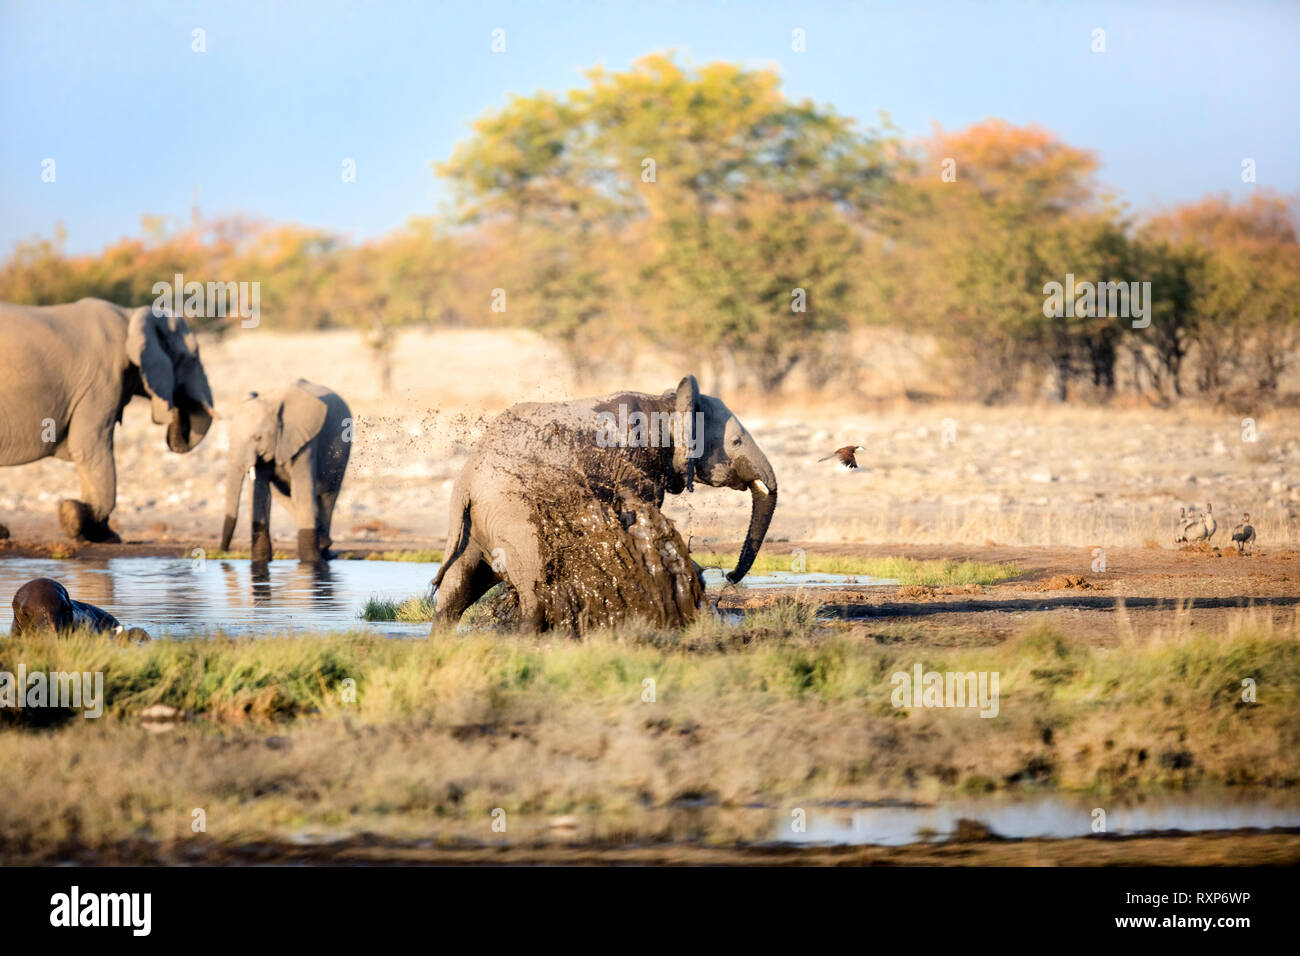 Elephant running through mud Stock Photo